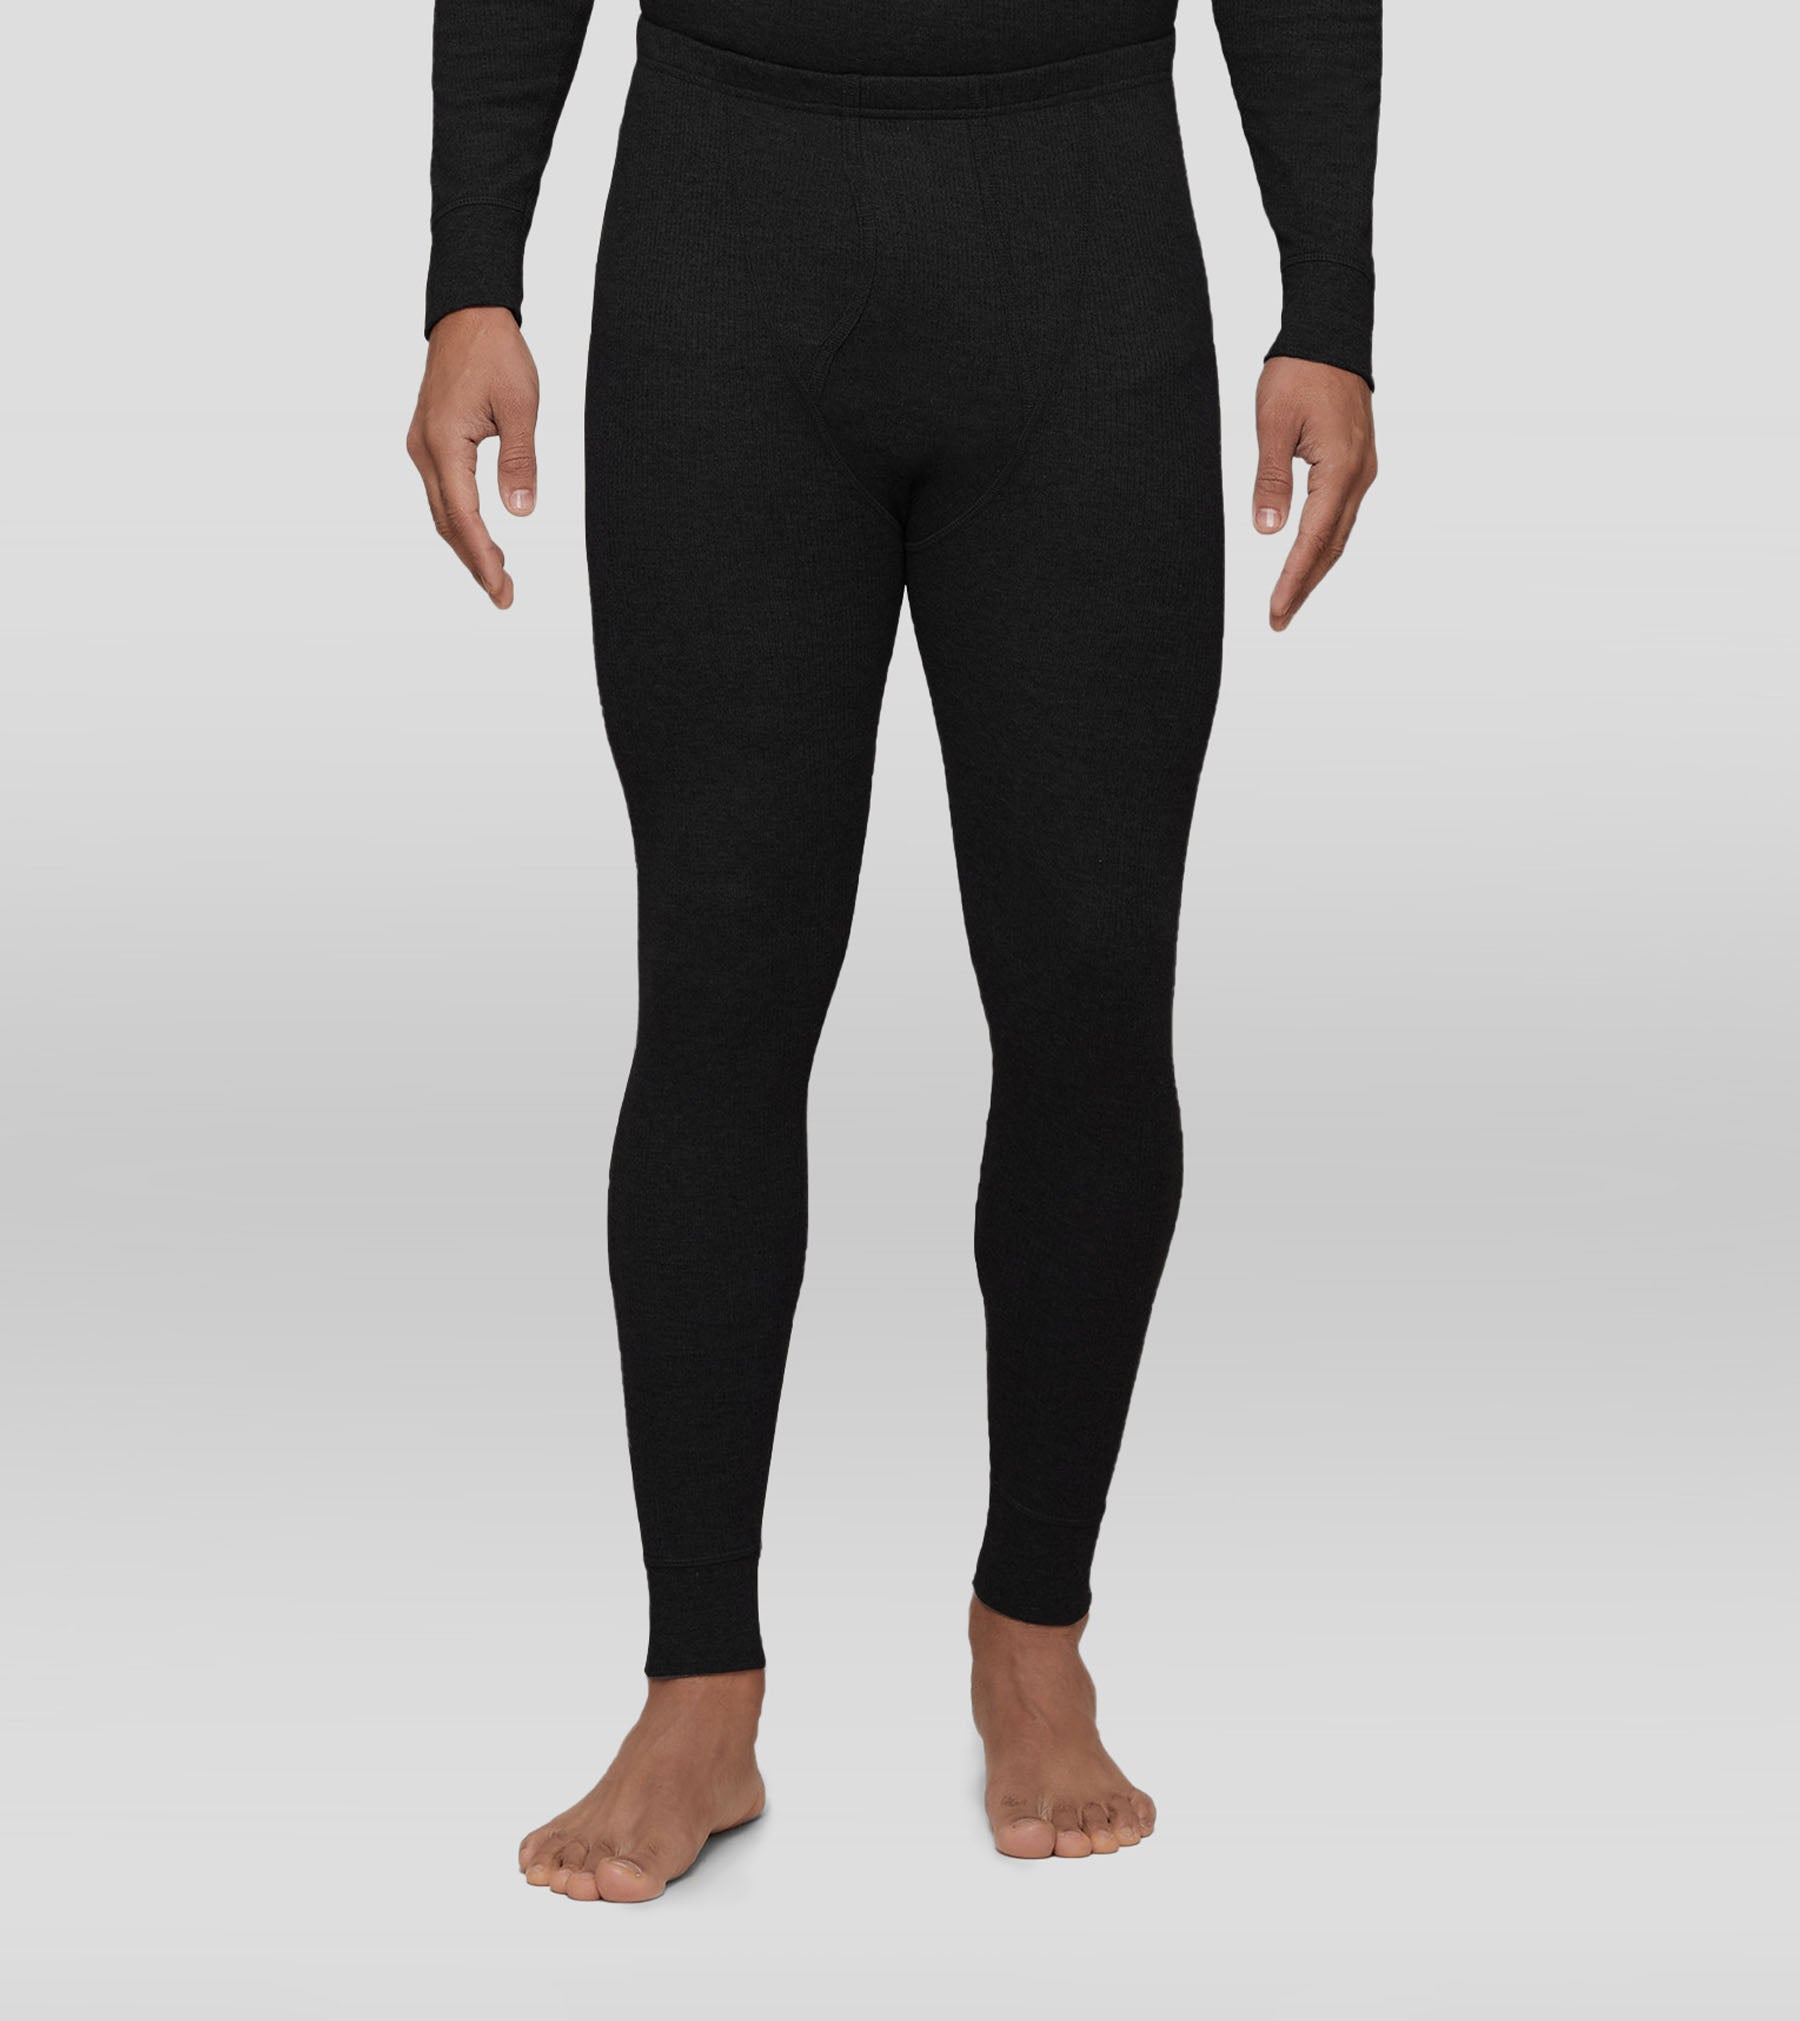 Men's Thermal Long John Underwear - Black, Shop Today. Get it Tomorrow!